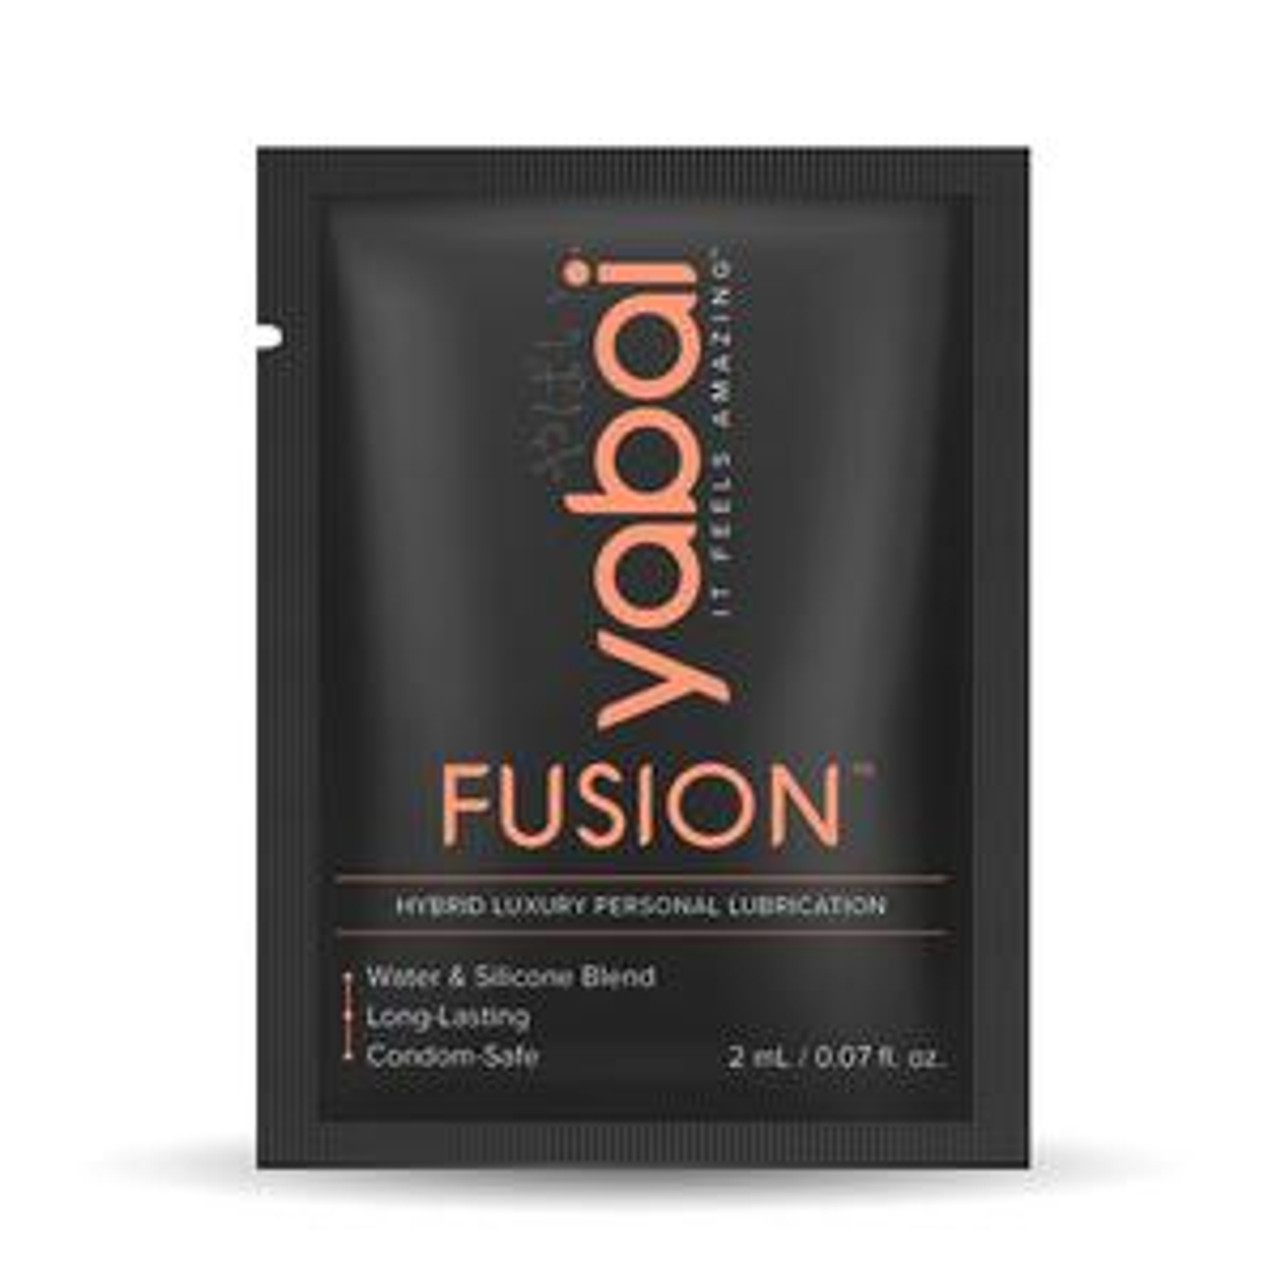 Yabai Fusion Lubricant | Buy Yabai Personal Lubricants online from Condom Depot.com